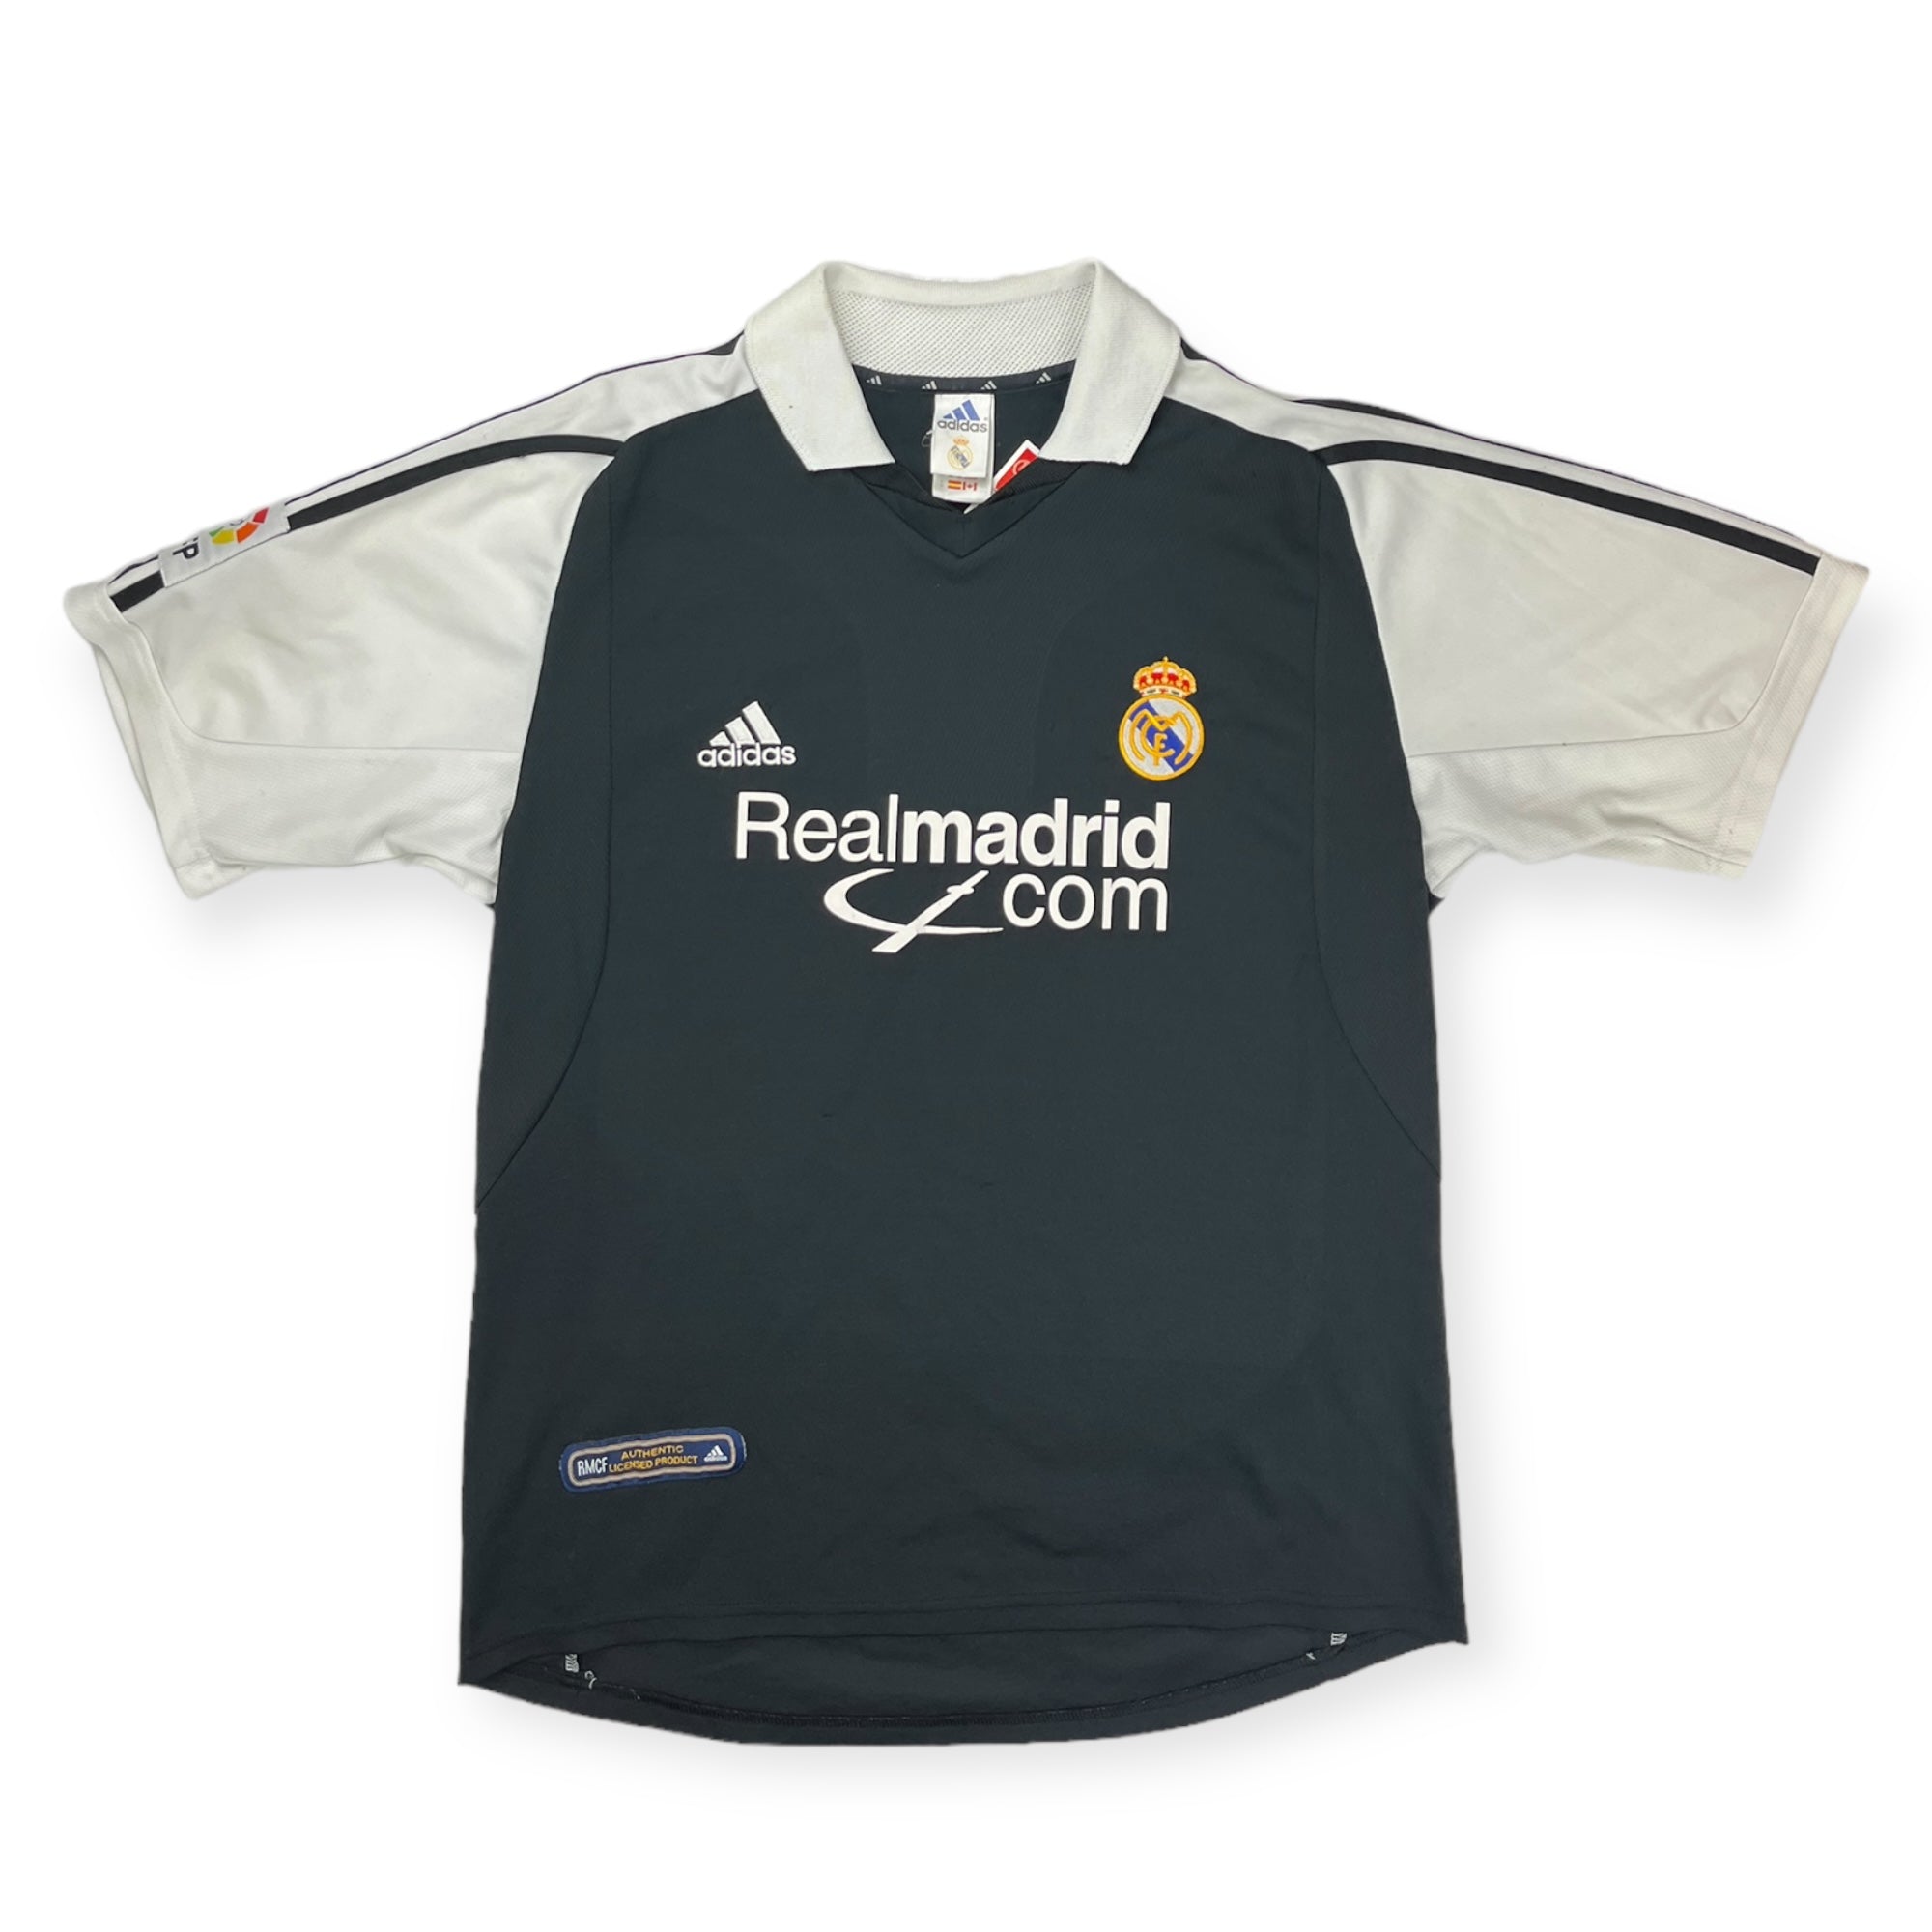 Real Madrid 2001 Away Shirt